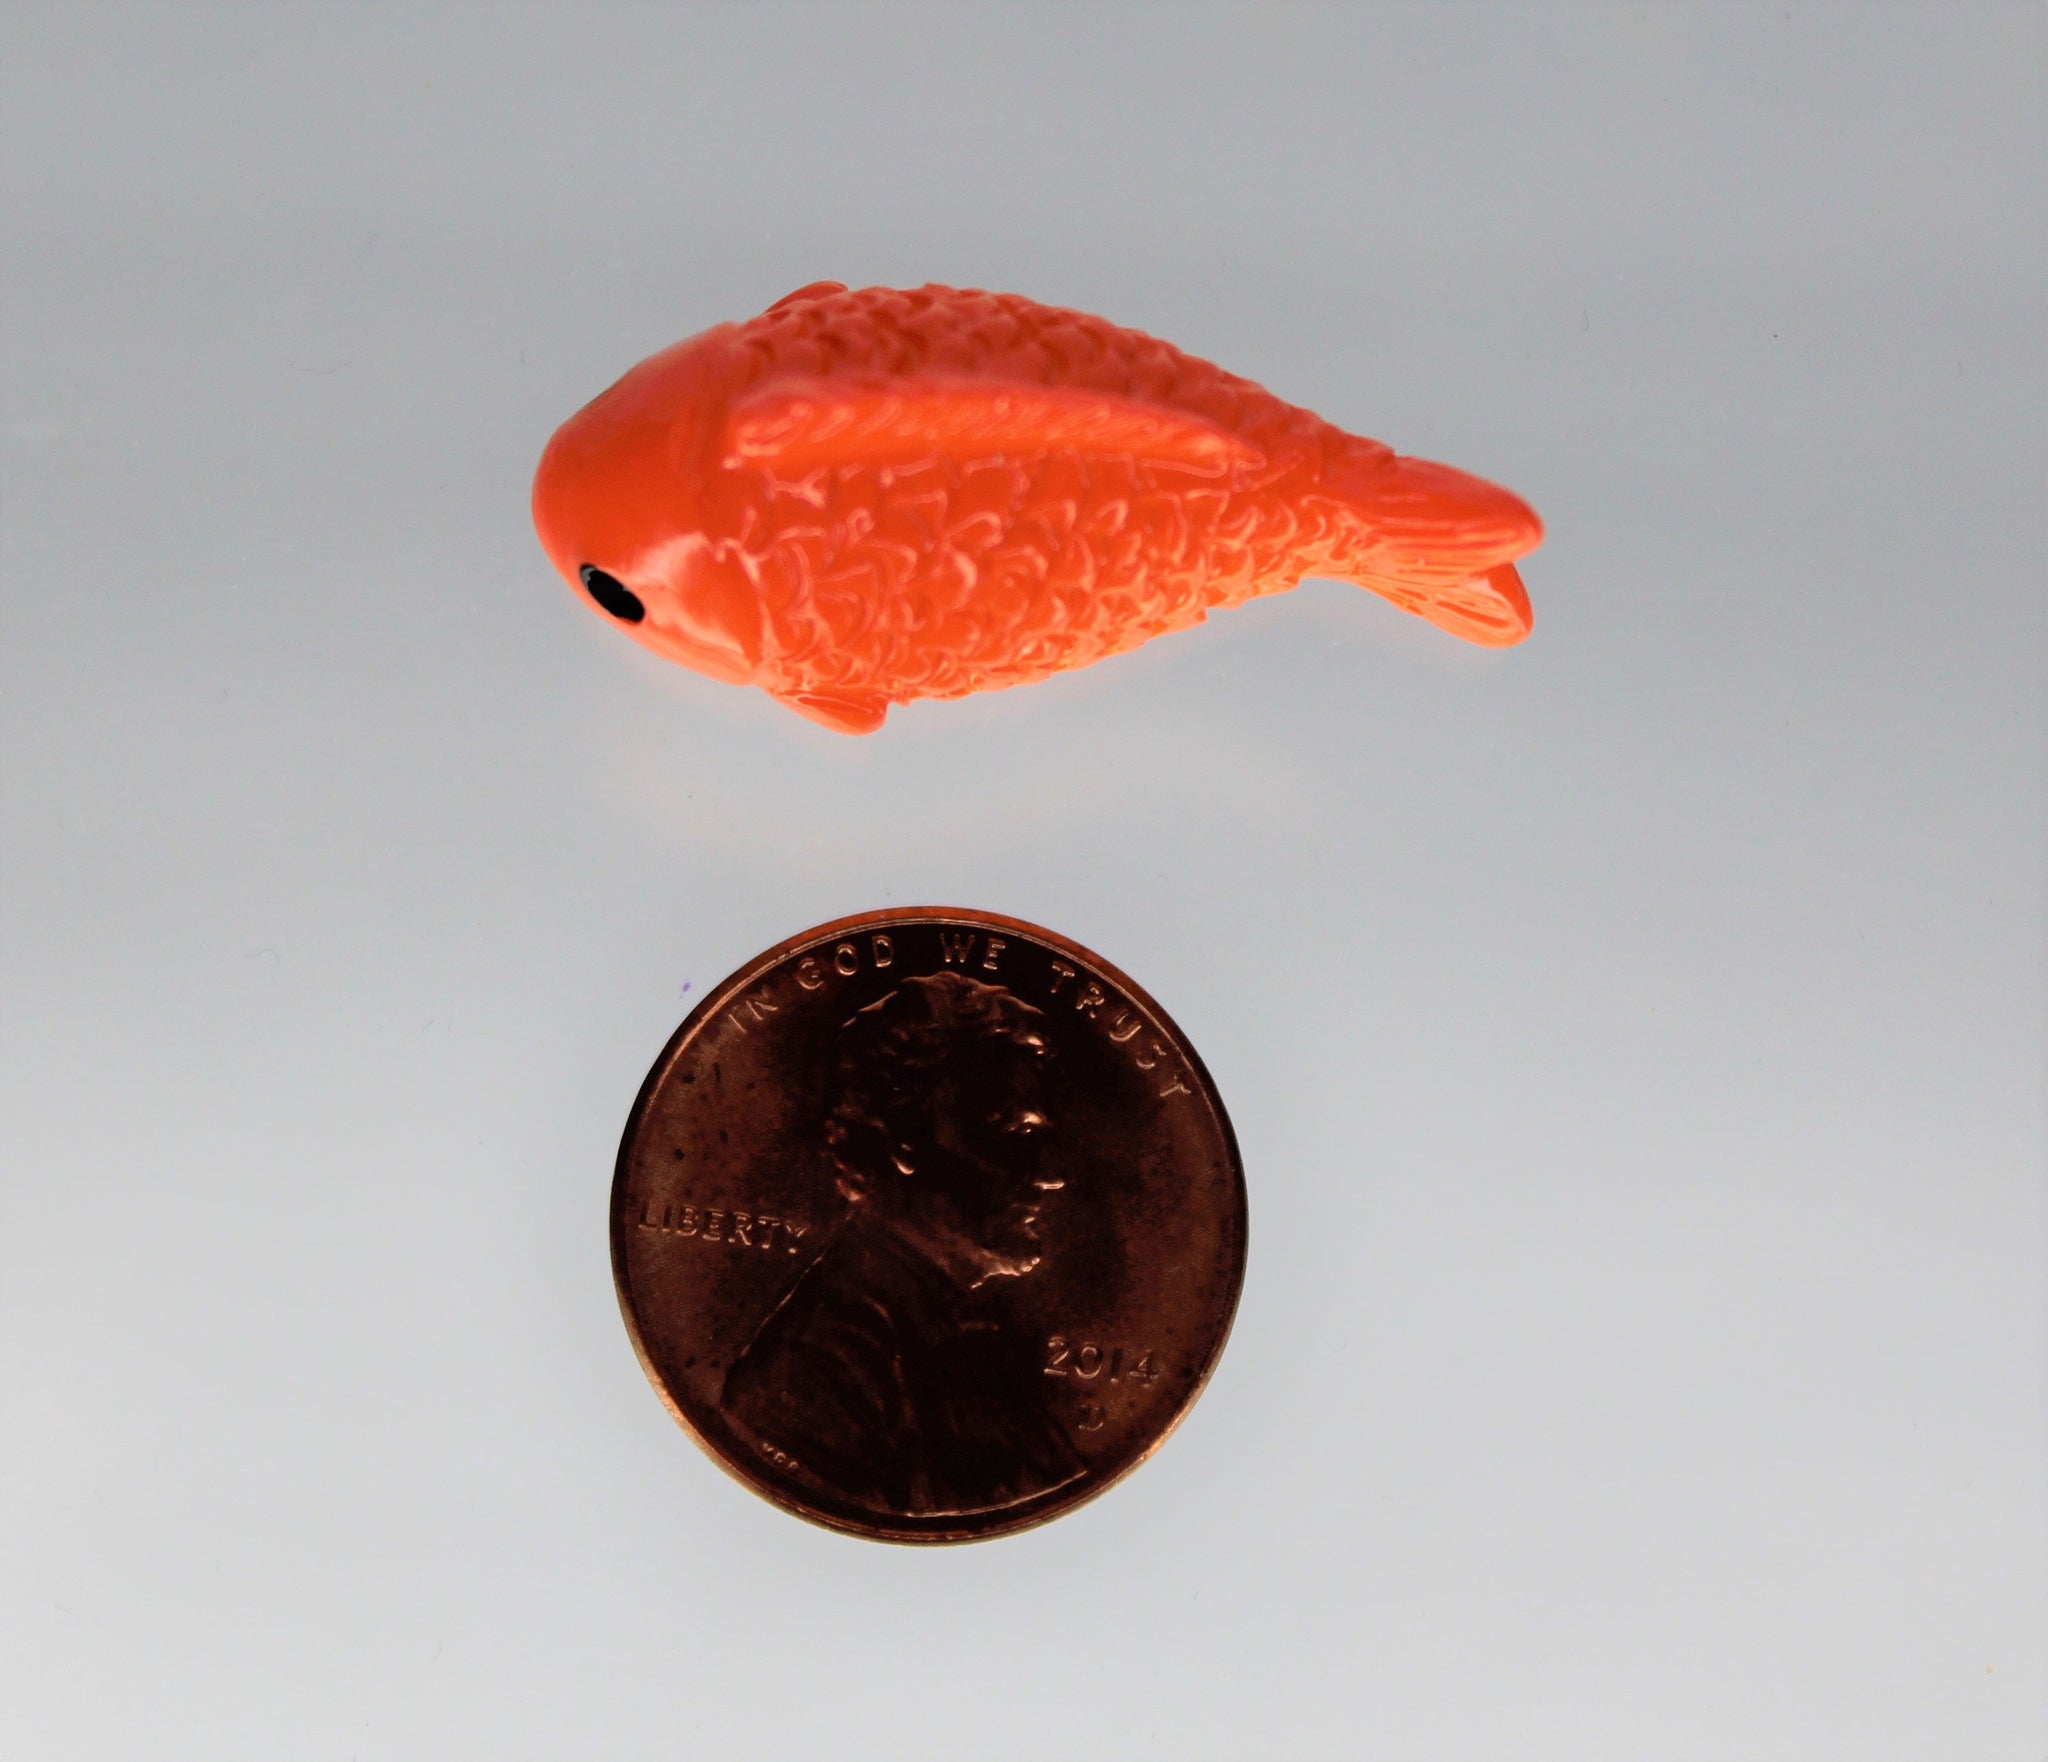 RepostBy @miniatures_vintagetoys_museum: Beautiful tiny fish we